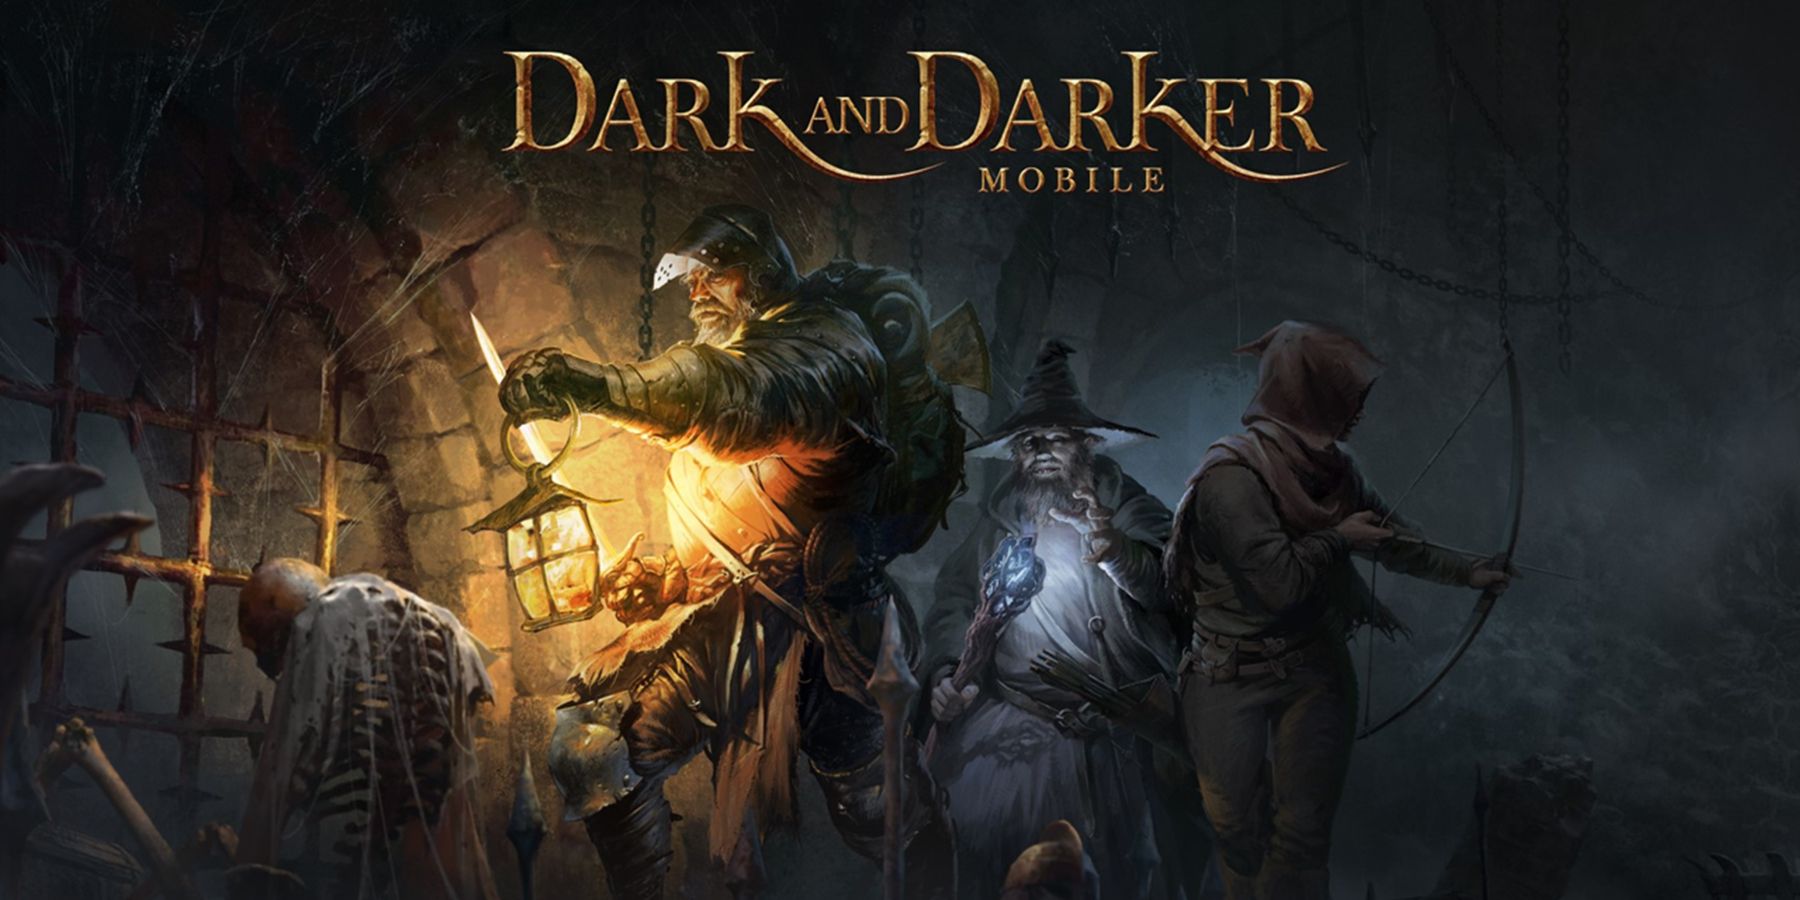 dark and darker mobile party of adventurers